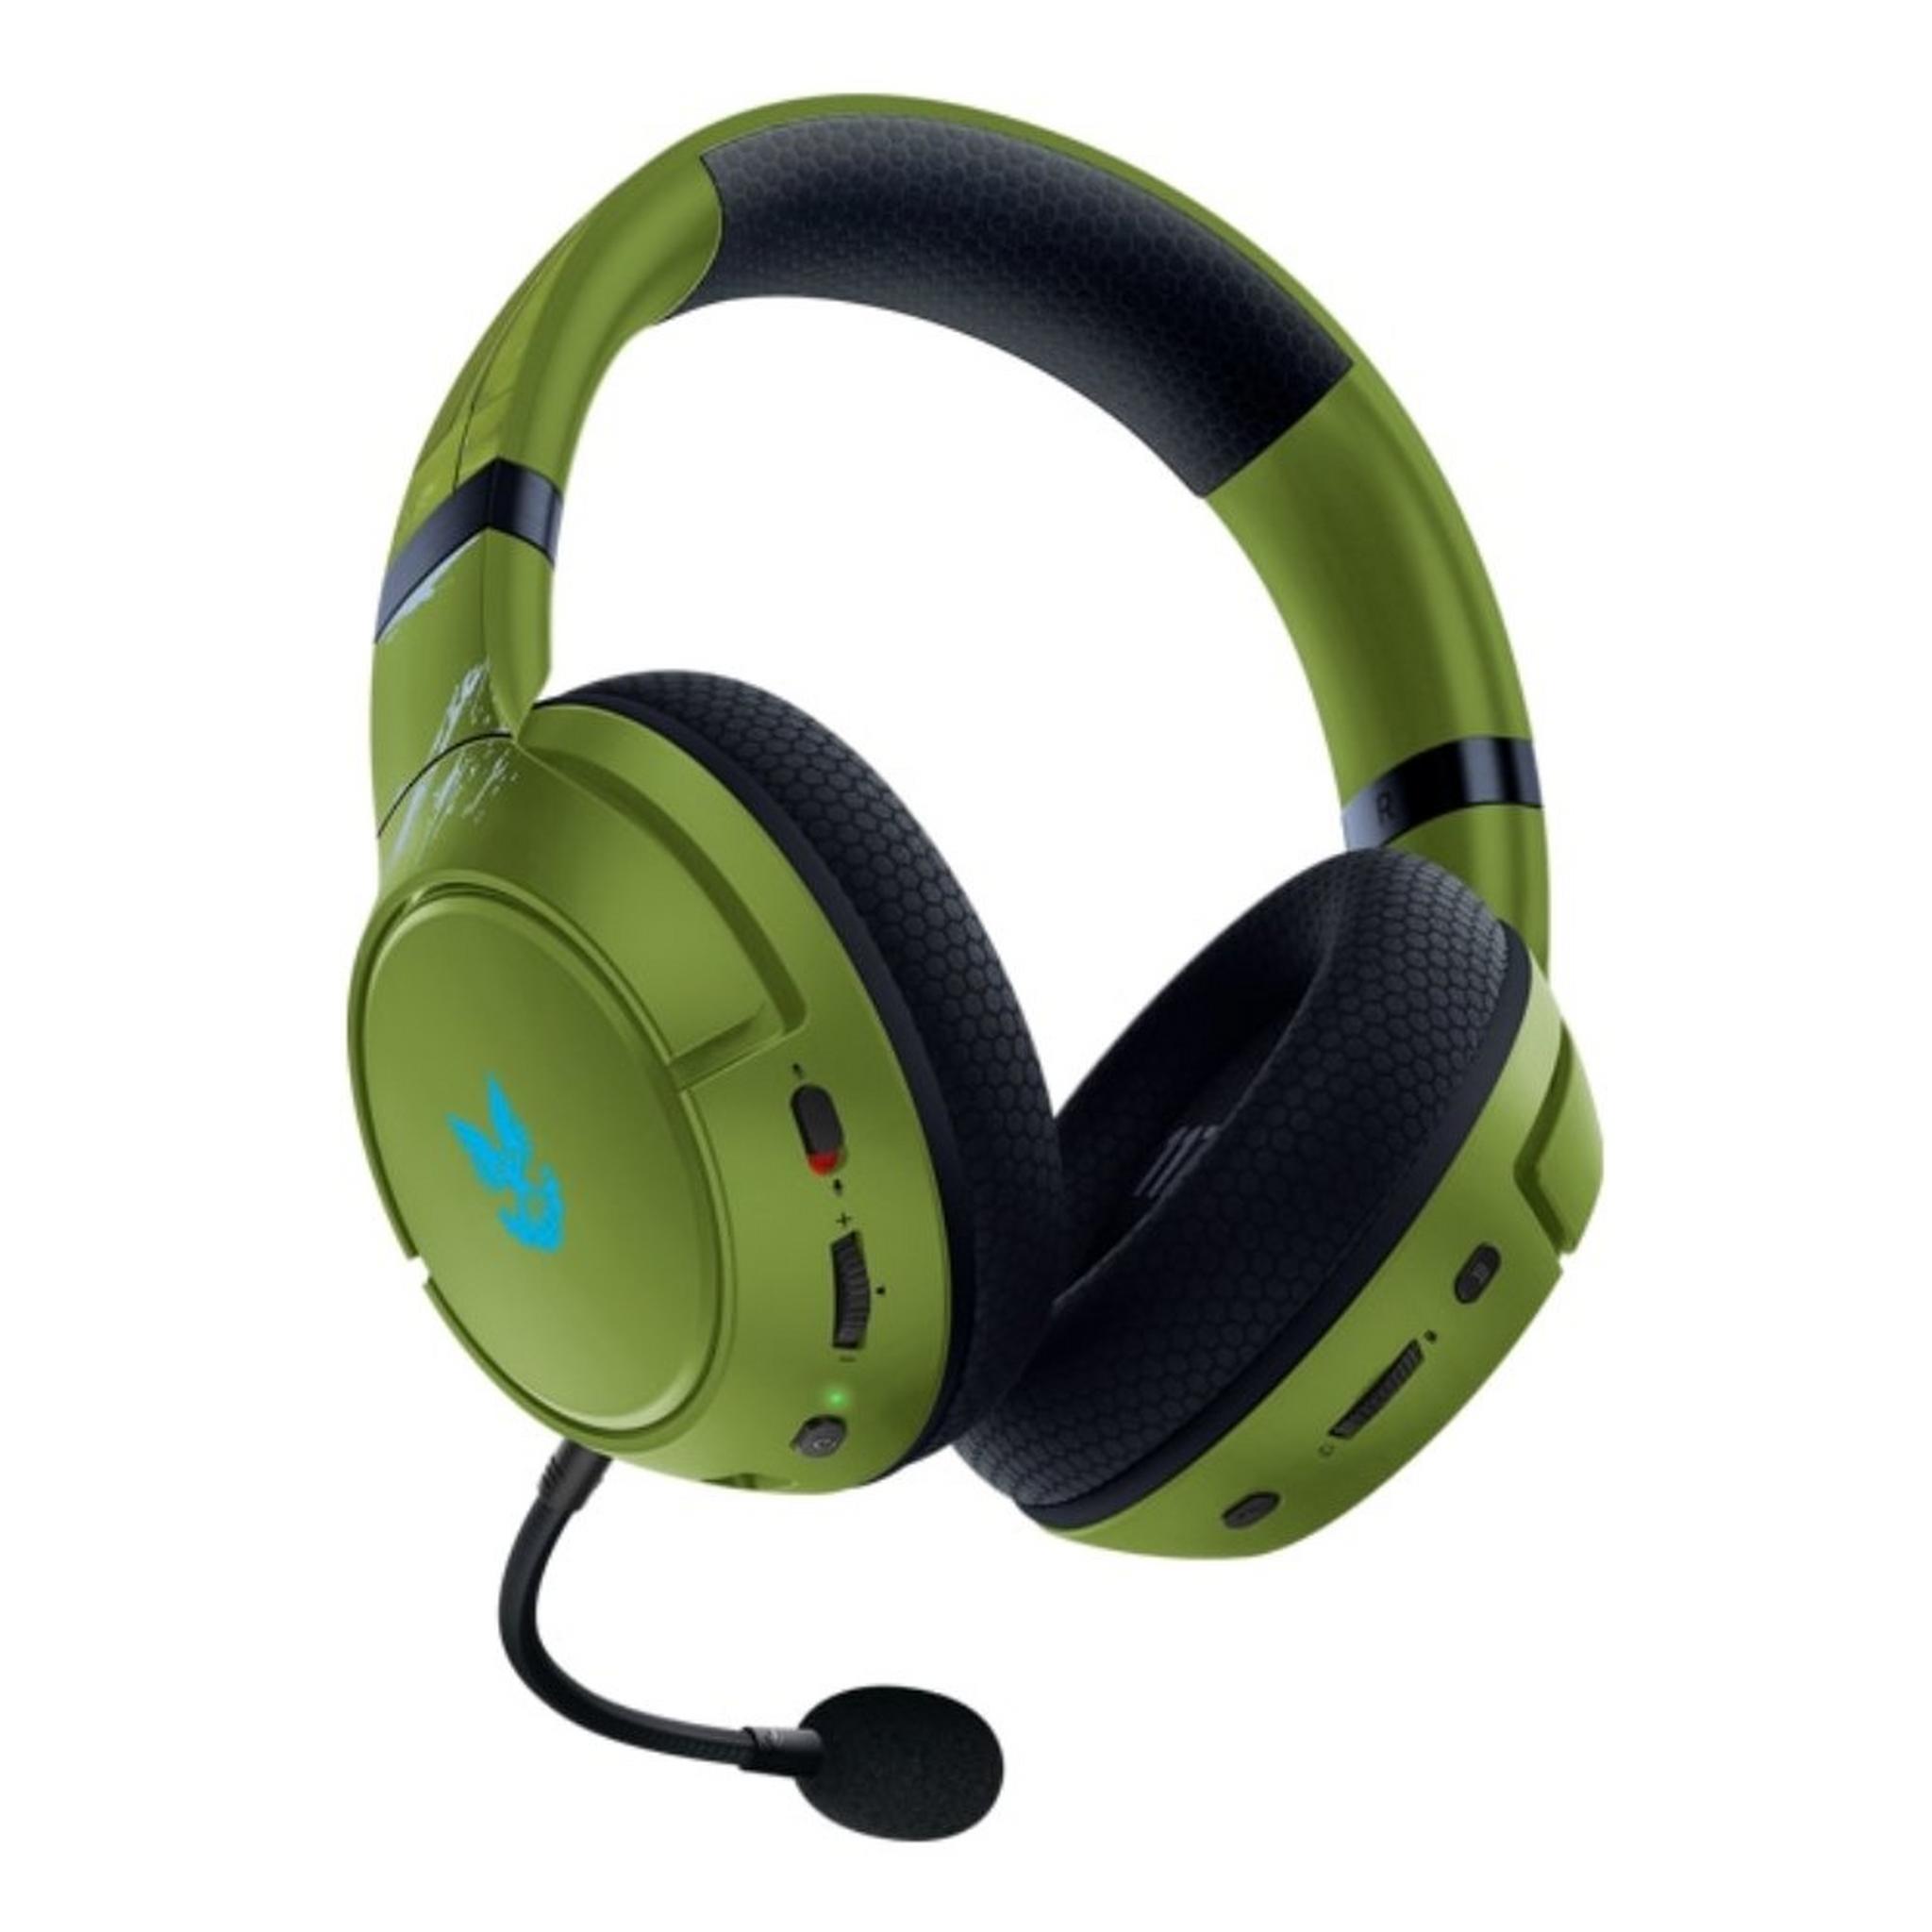 Razer Kaira Pro Xbox Wireless Gaming Headset - Halo Infinite Edition